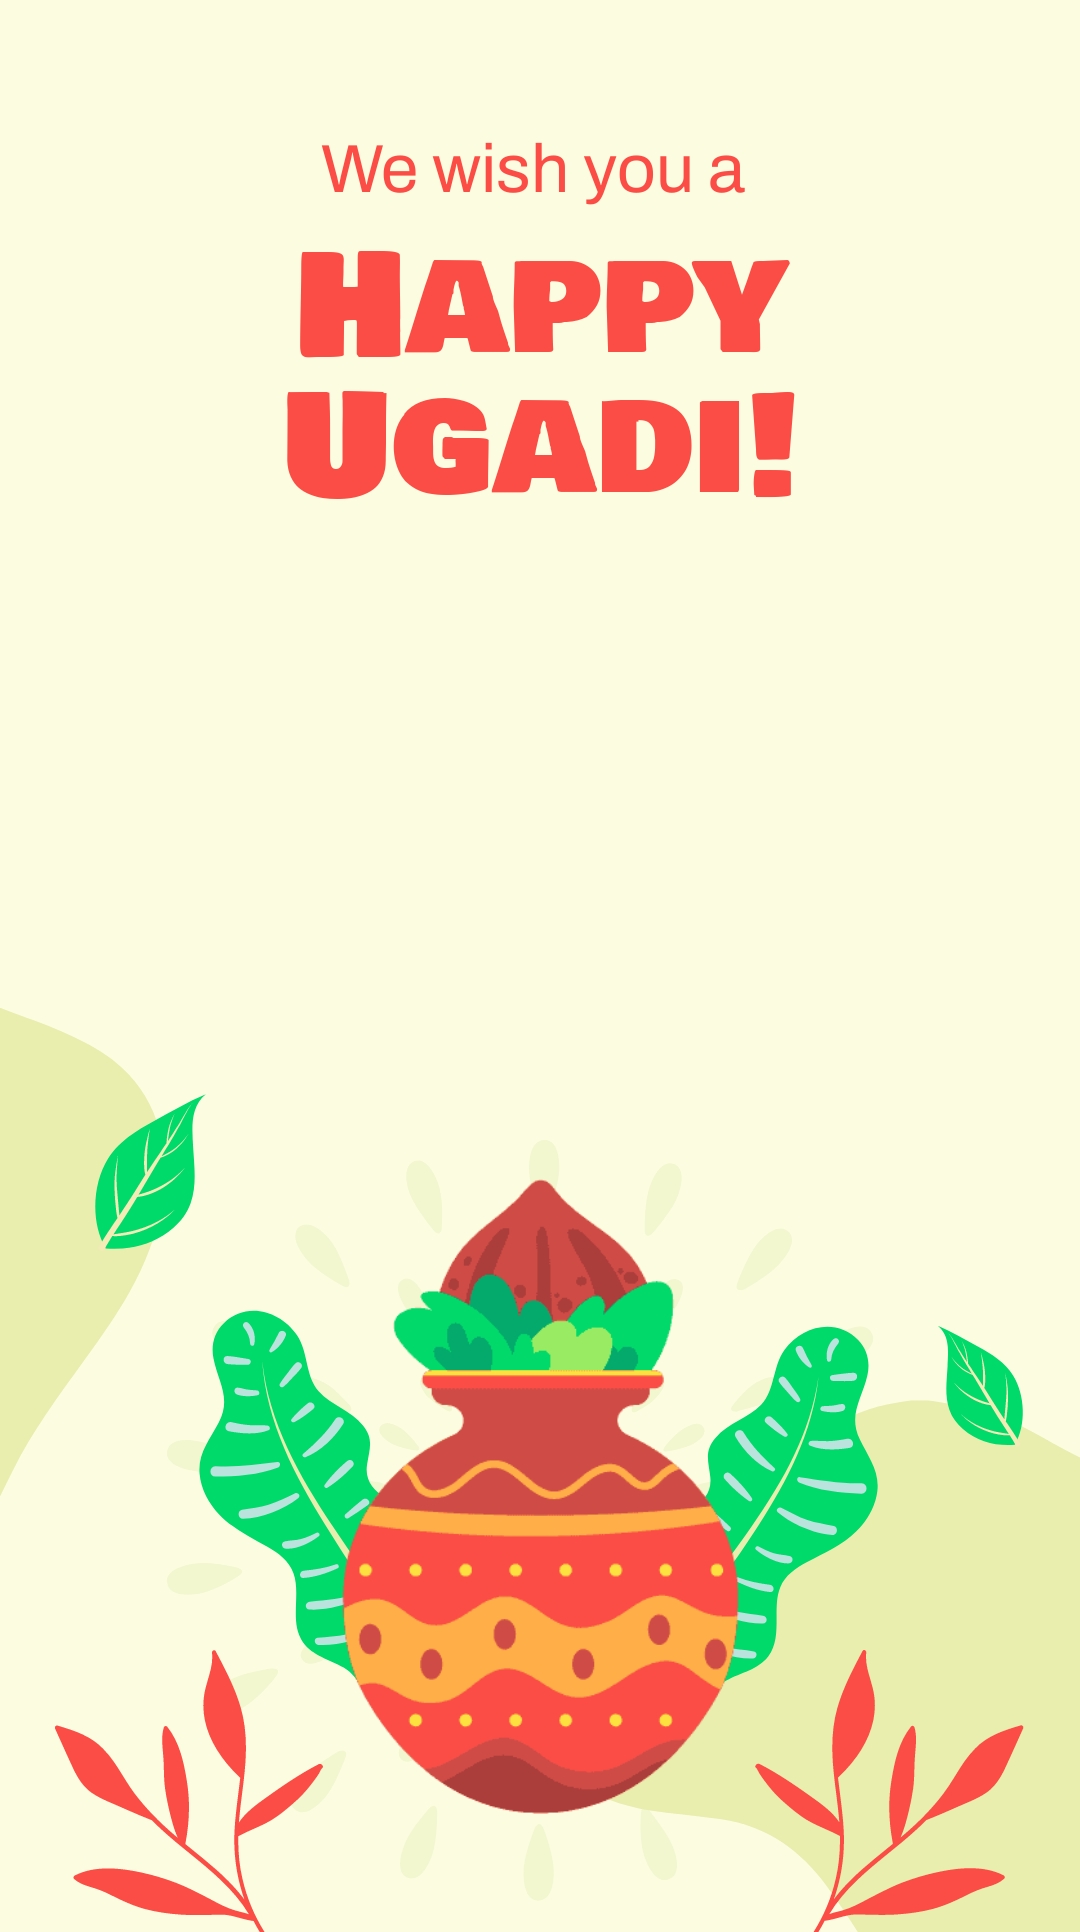 Happy Ugadi Snapchat Geofilter Template